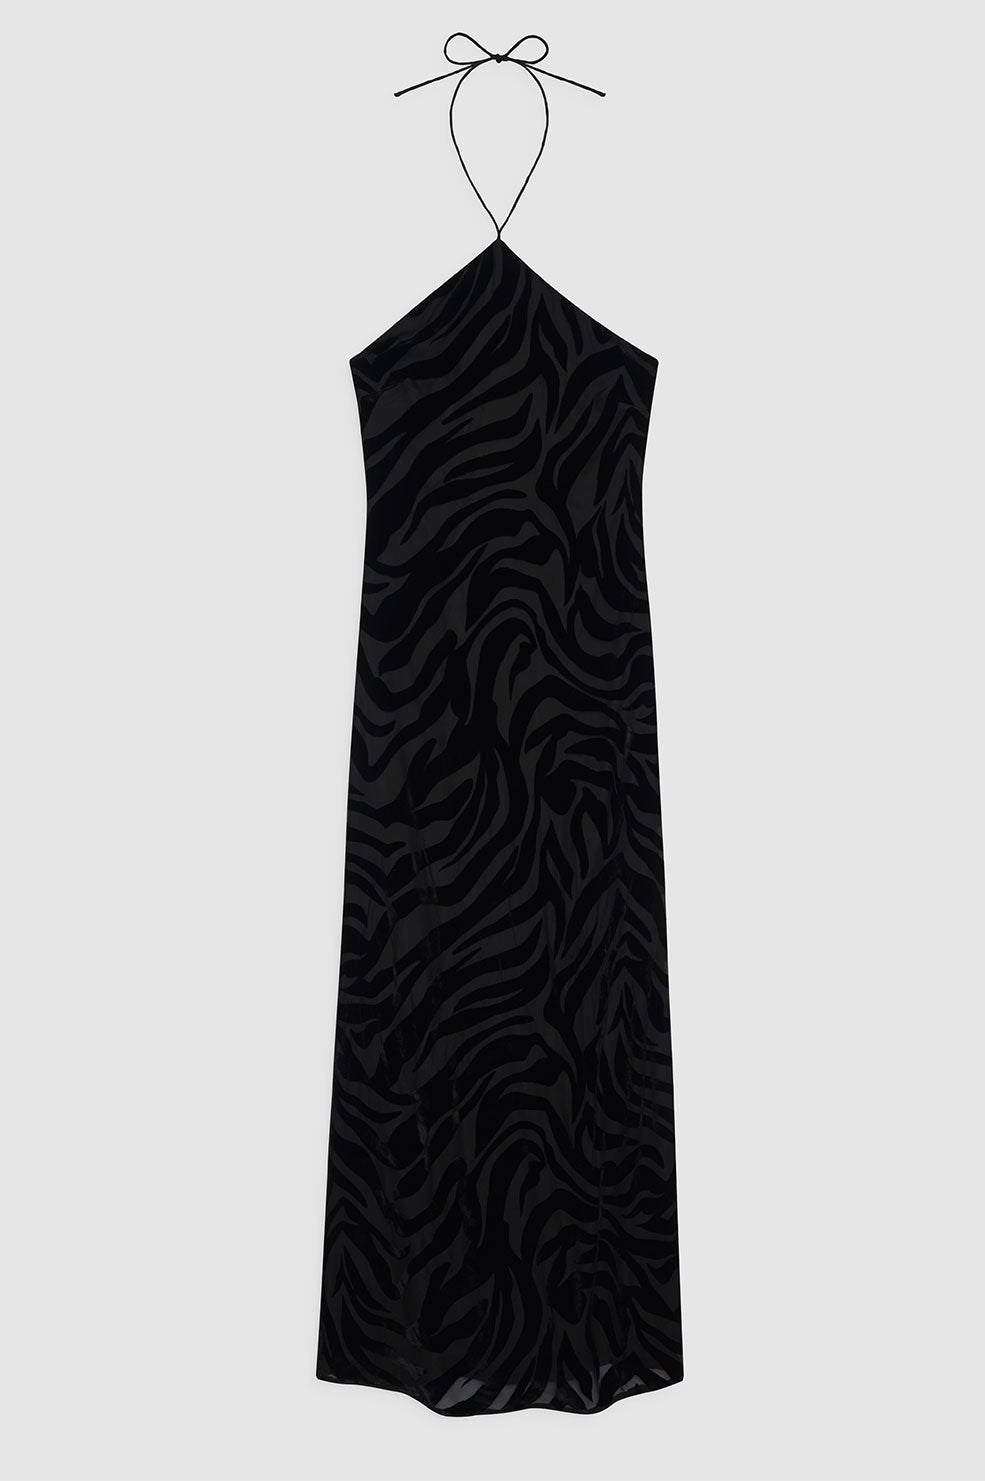 ANINE BING Leanne Dress - Black Zebra Burnout - Front View